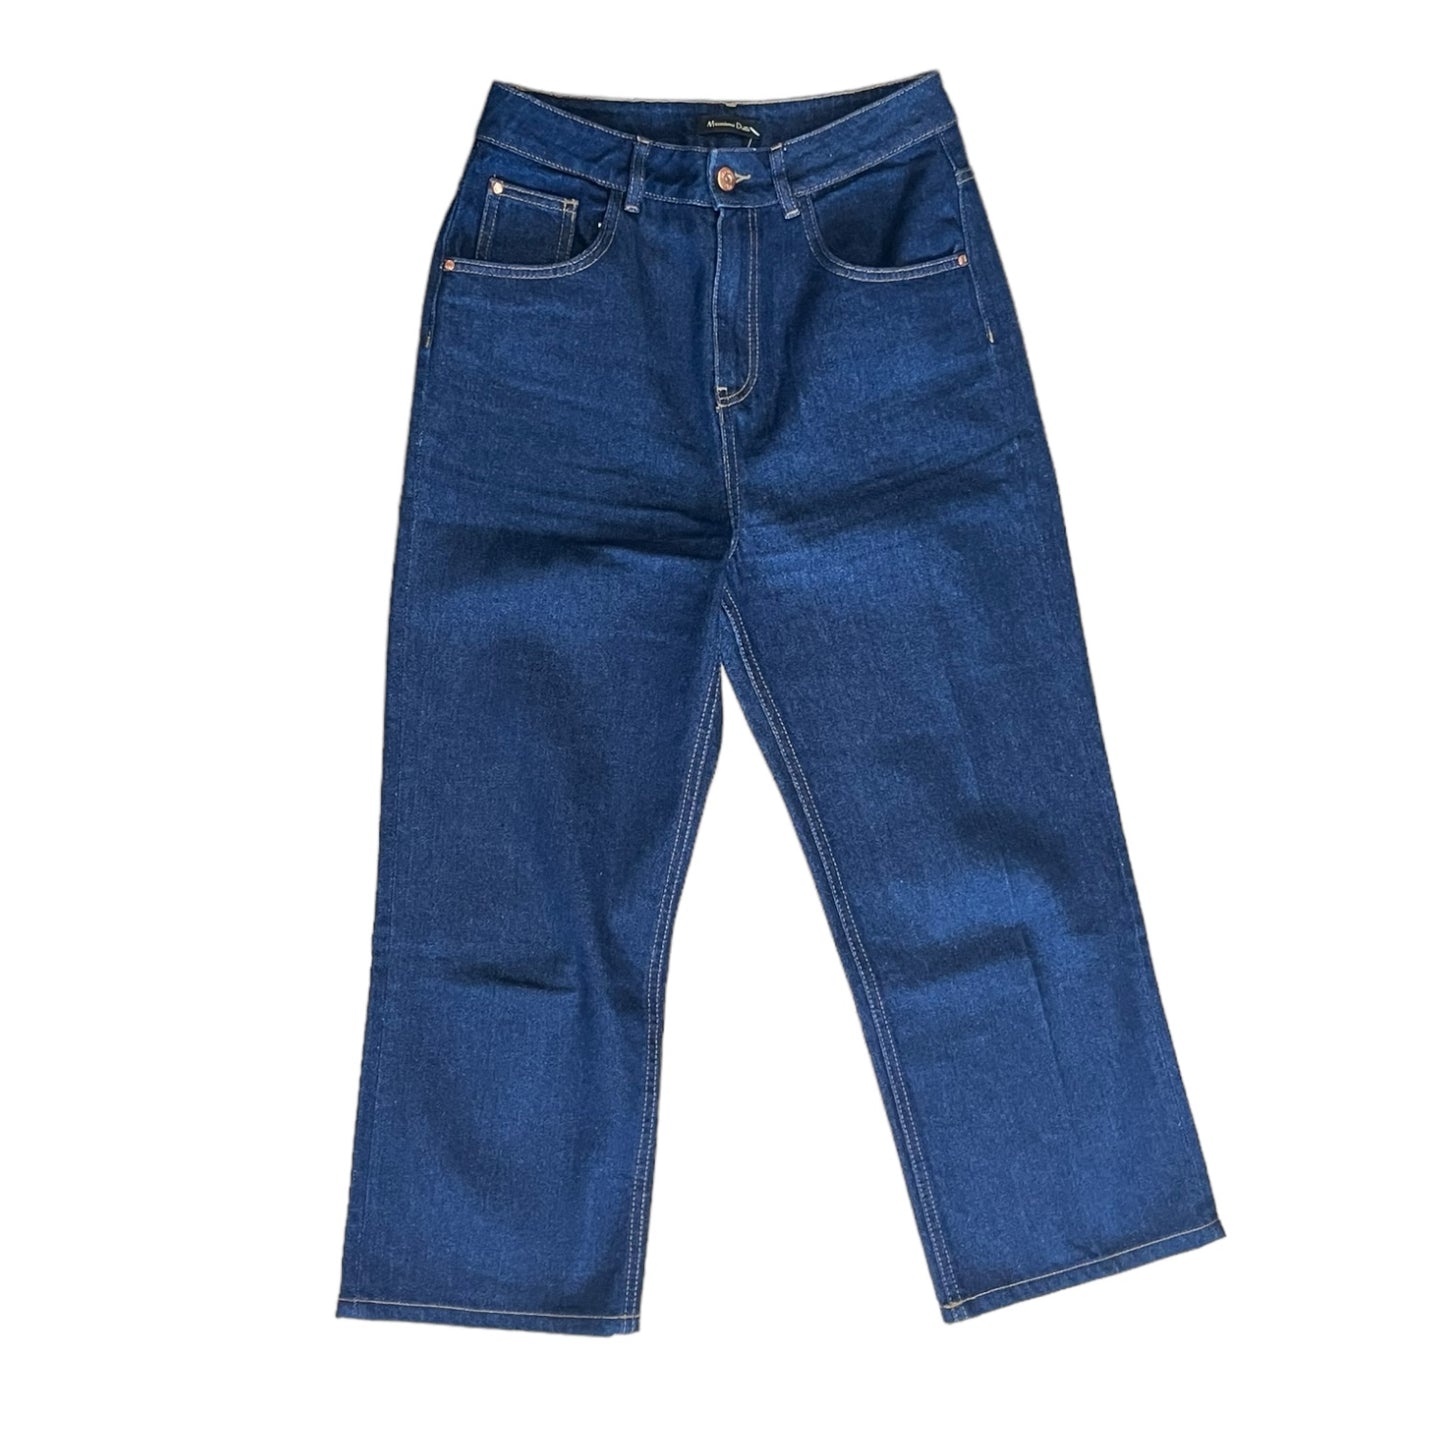 Massimo Dutti Dark Blue Jeans